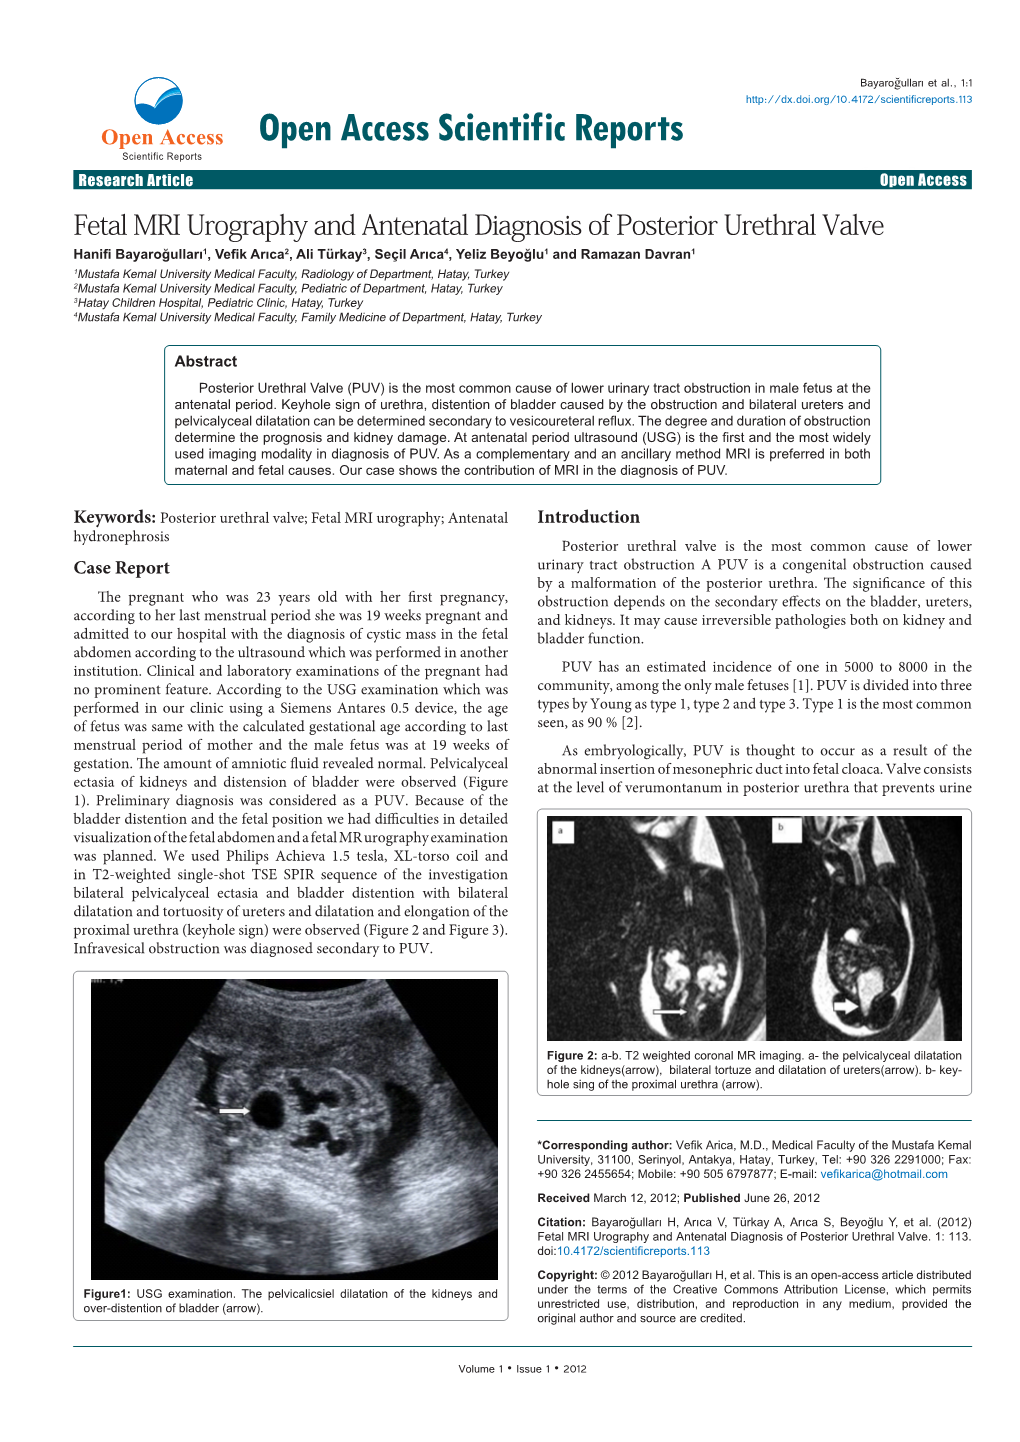 Fetal MRI Urography and Antenatal Diagnosis of Posterior Urethral Valve